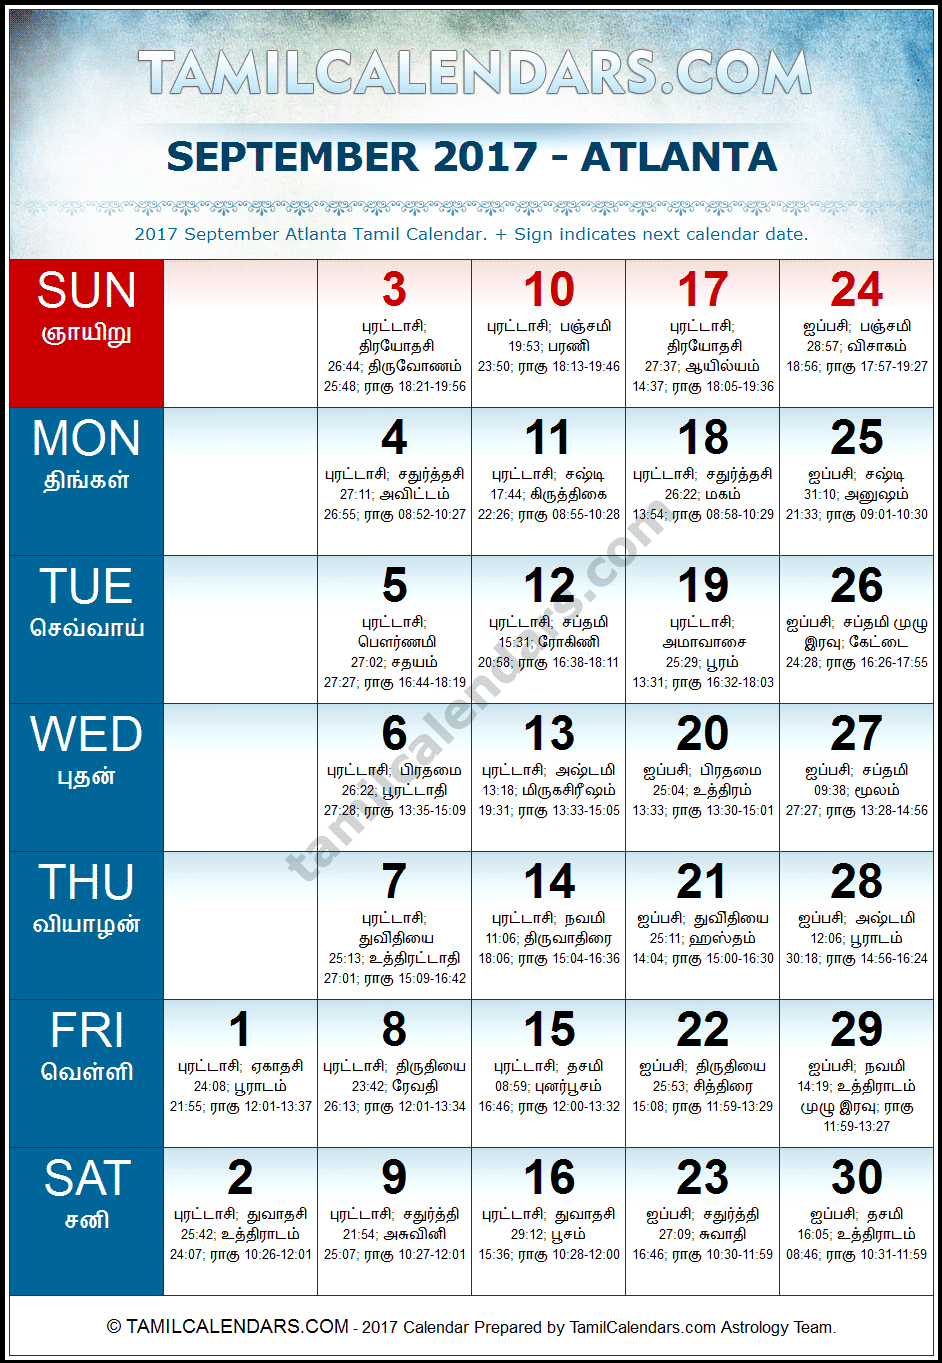 September 2017 Tamil Calendar for Atlanta, USA